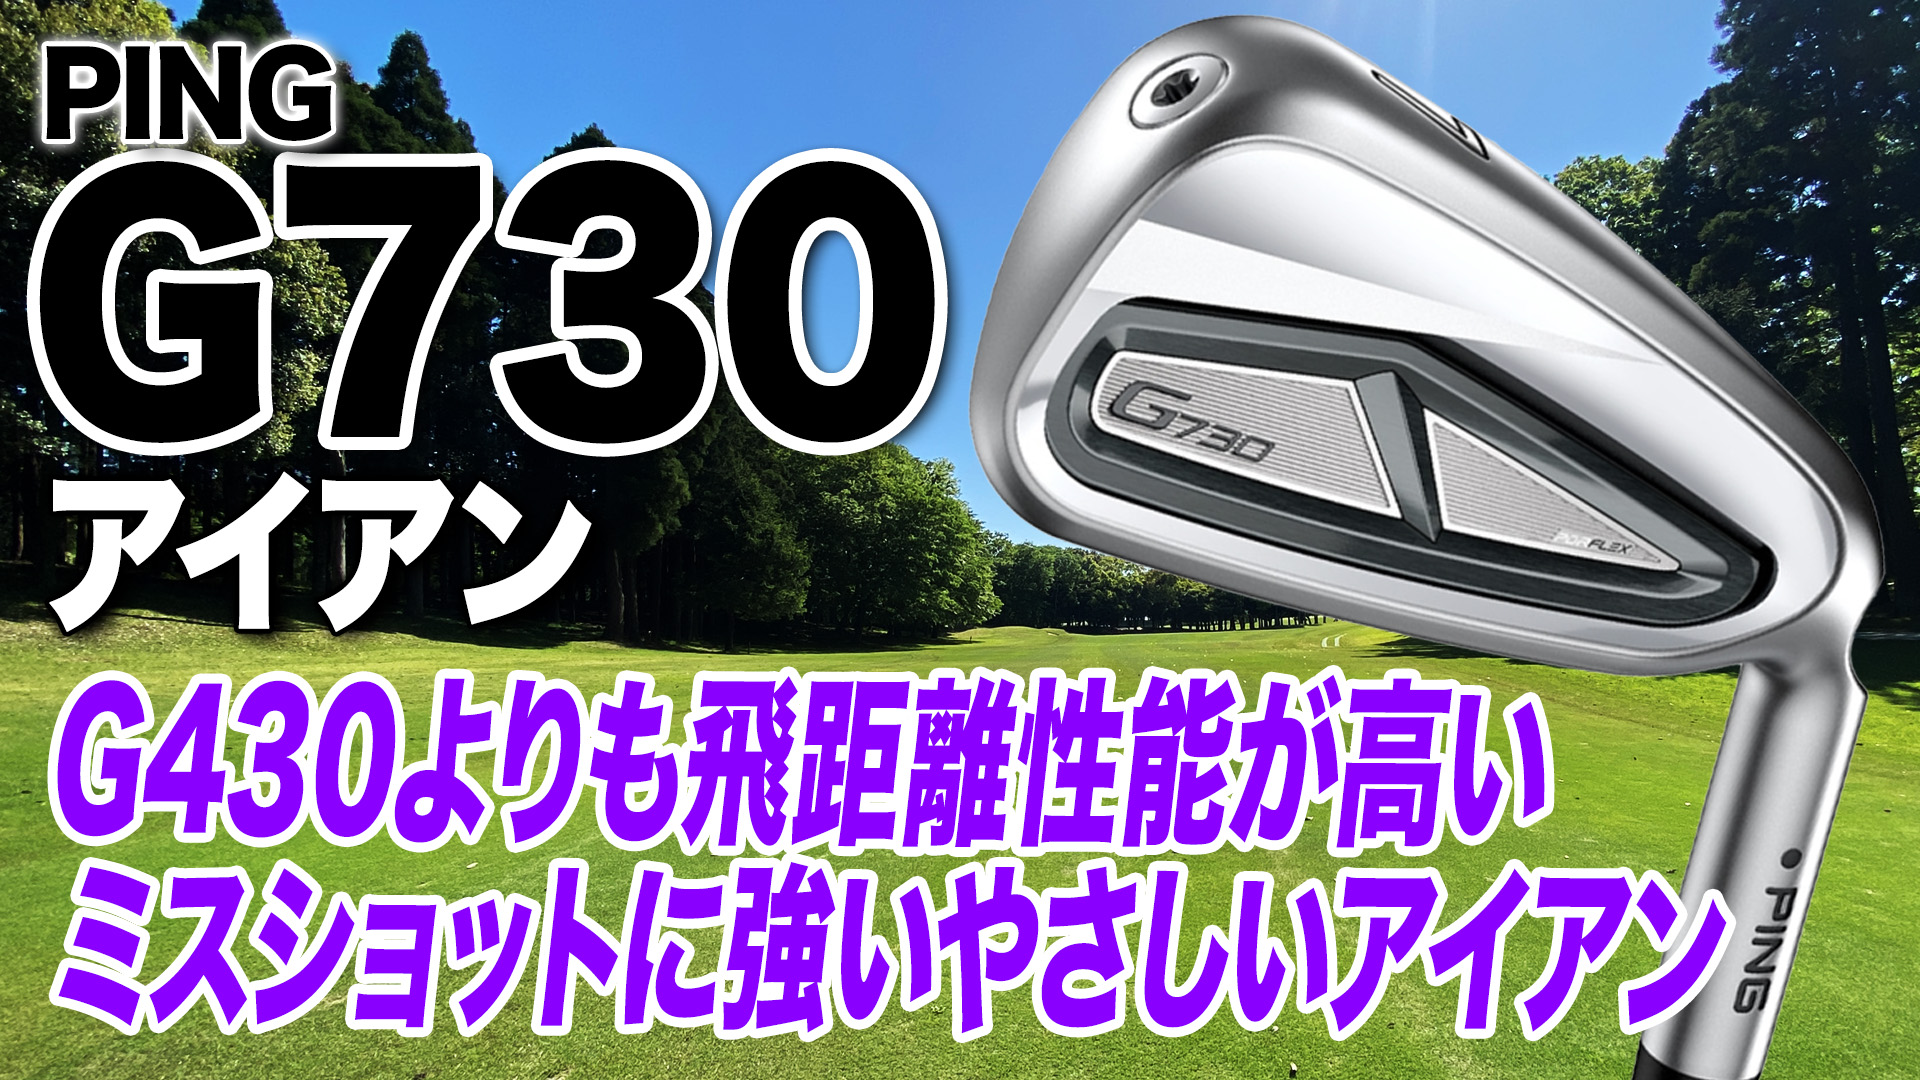 PING「G730 アイアン」【レビュー企画】